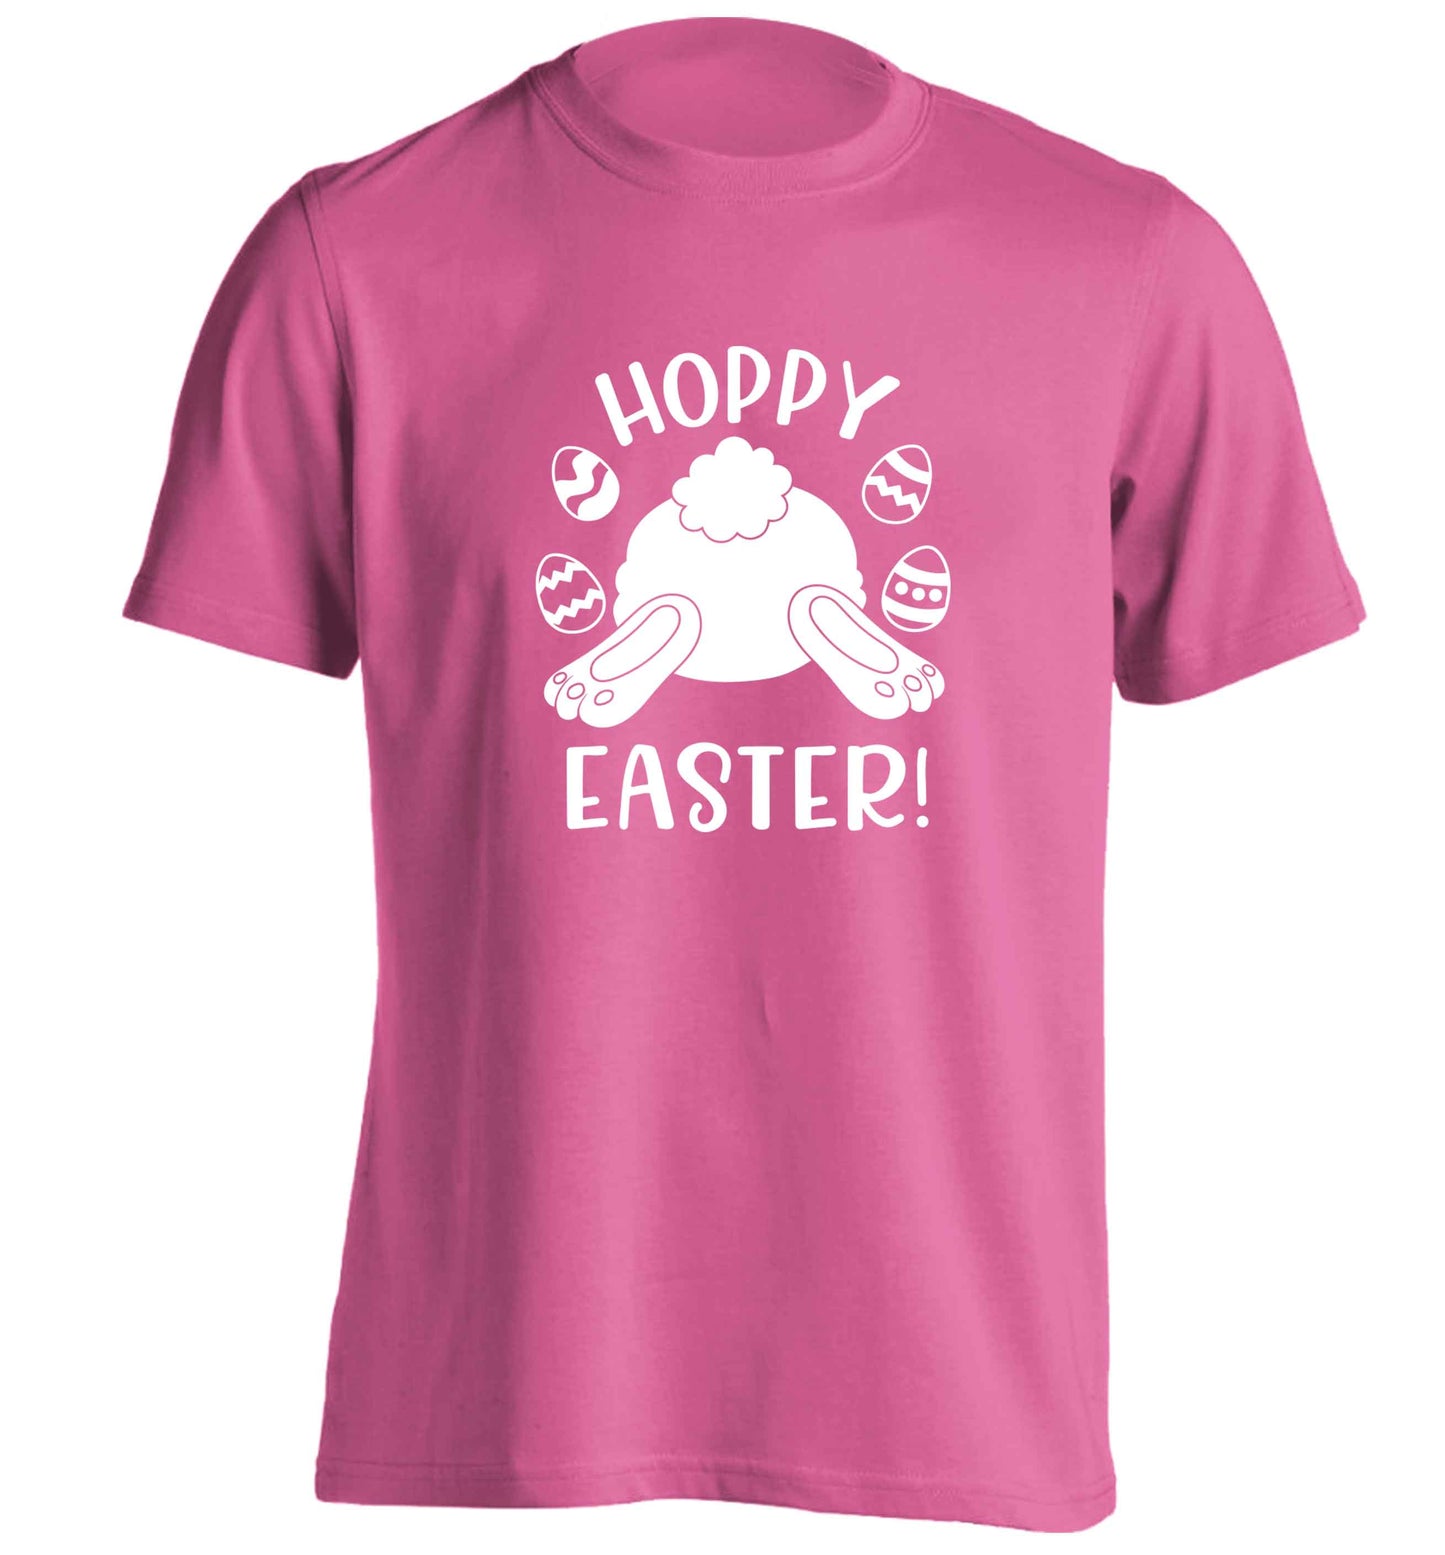 Hoppy Easter adults unisex pink Tshirt 2XL